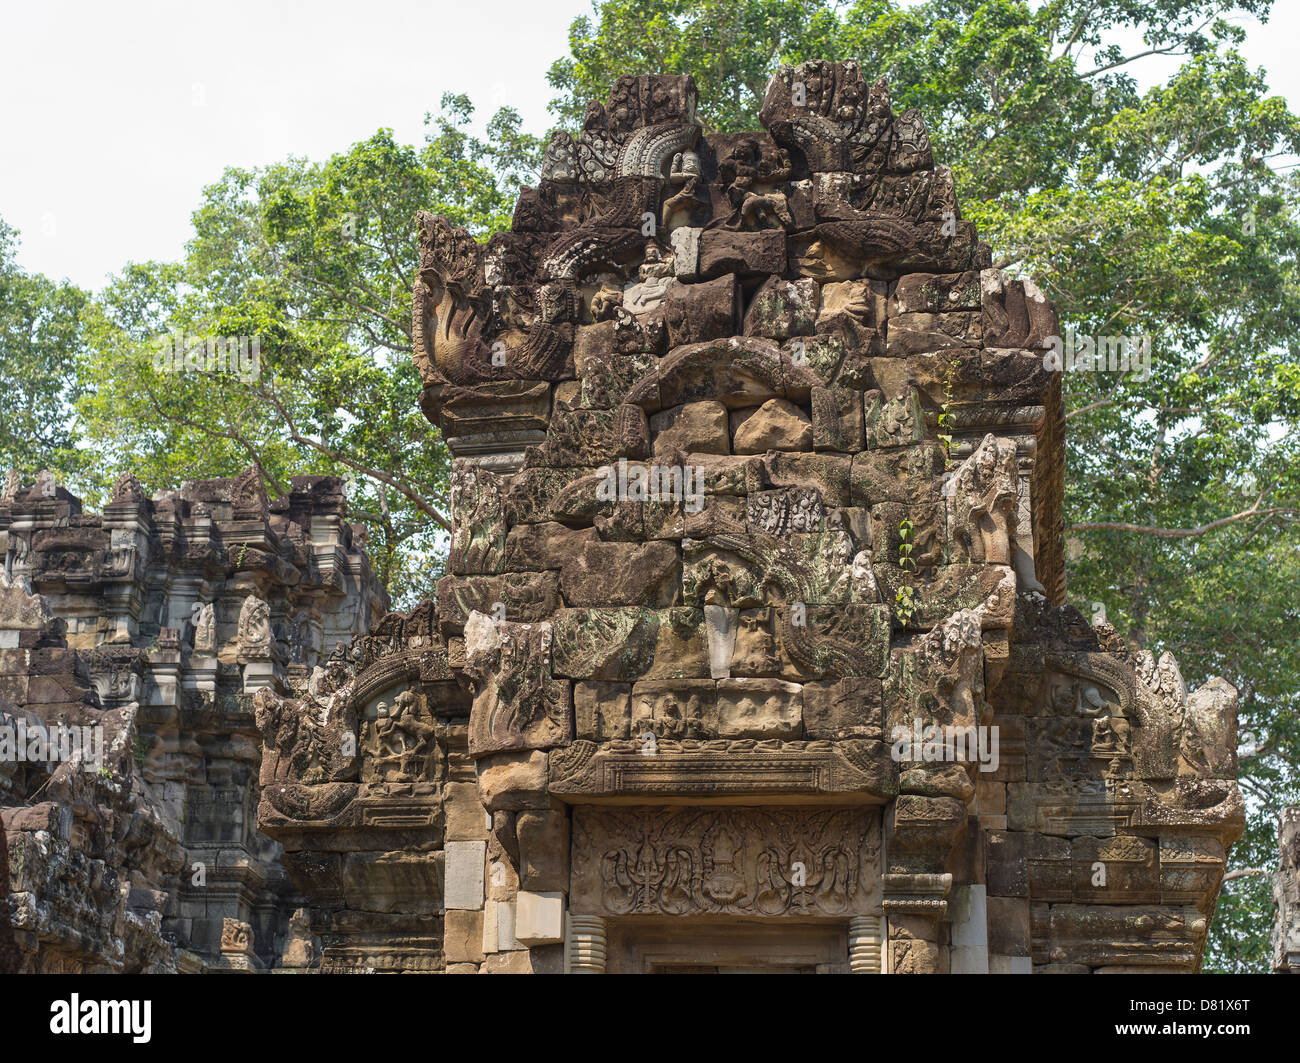 Dettaglio. Chau dire Tevoda. Parco Archeologico di Angkor. Siem Reap. Cambogia Foto Stock